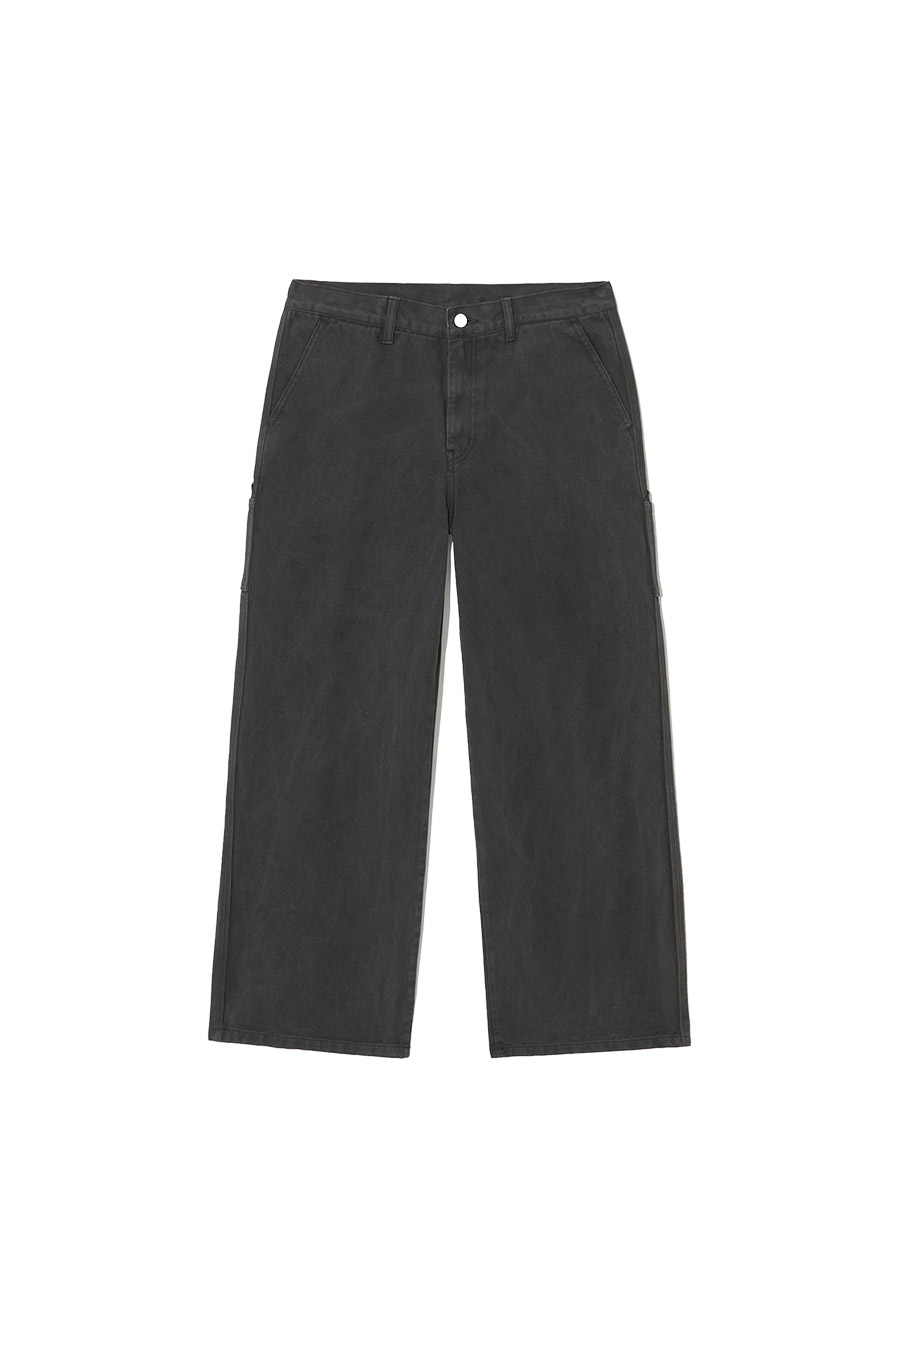 Garment Dyed Carpenter Pants Black - A.DECADE